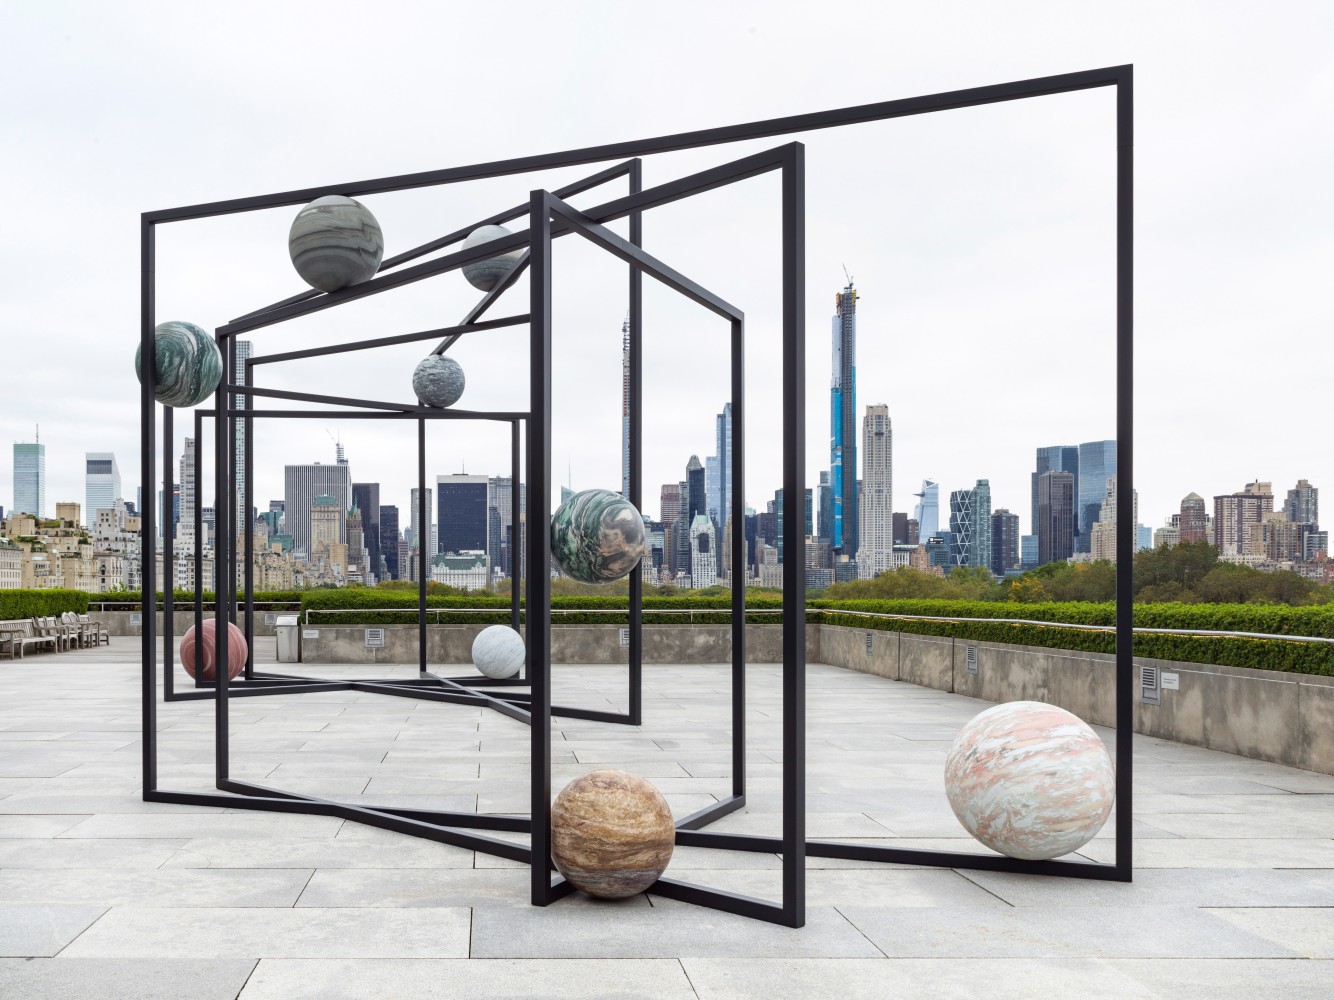 Installation view:&amp;nbsp;Alicja Kwade, ParaPivot, The Roof Garden Commission, The Metropolitan Museum of Art, New York, 2019.

Photo:&amp;nbsp;Roman M&amp;auml;rz

&amp;nbsp;